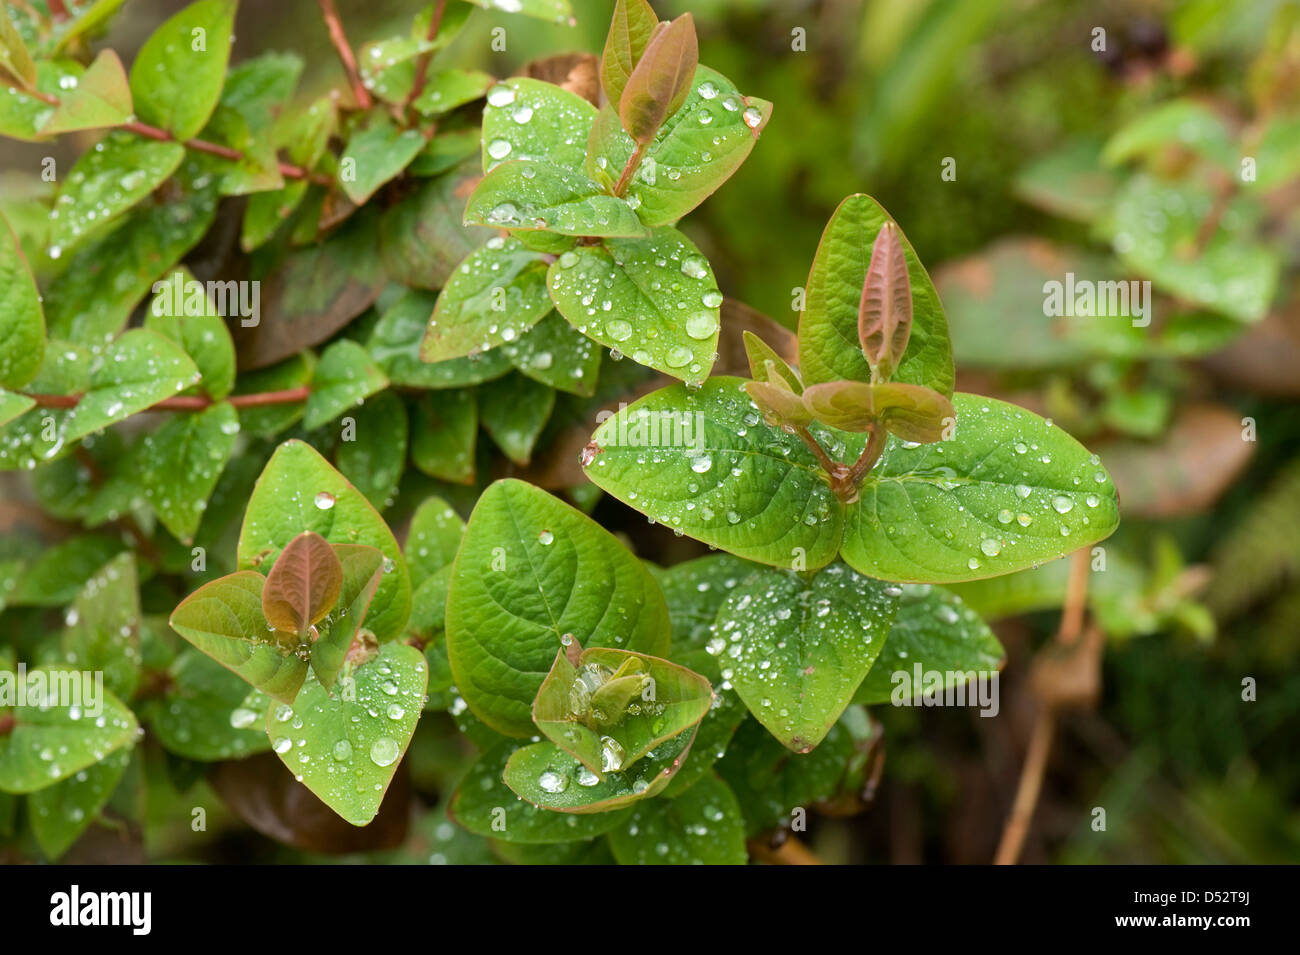 Hypericum x inodorum a garden shrub leaves with rain water droplets Stock Photo